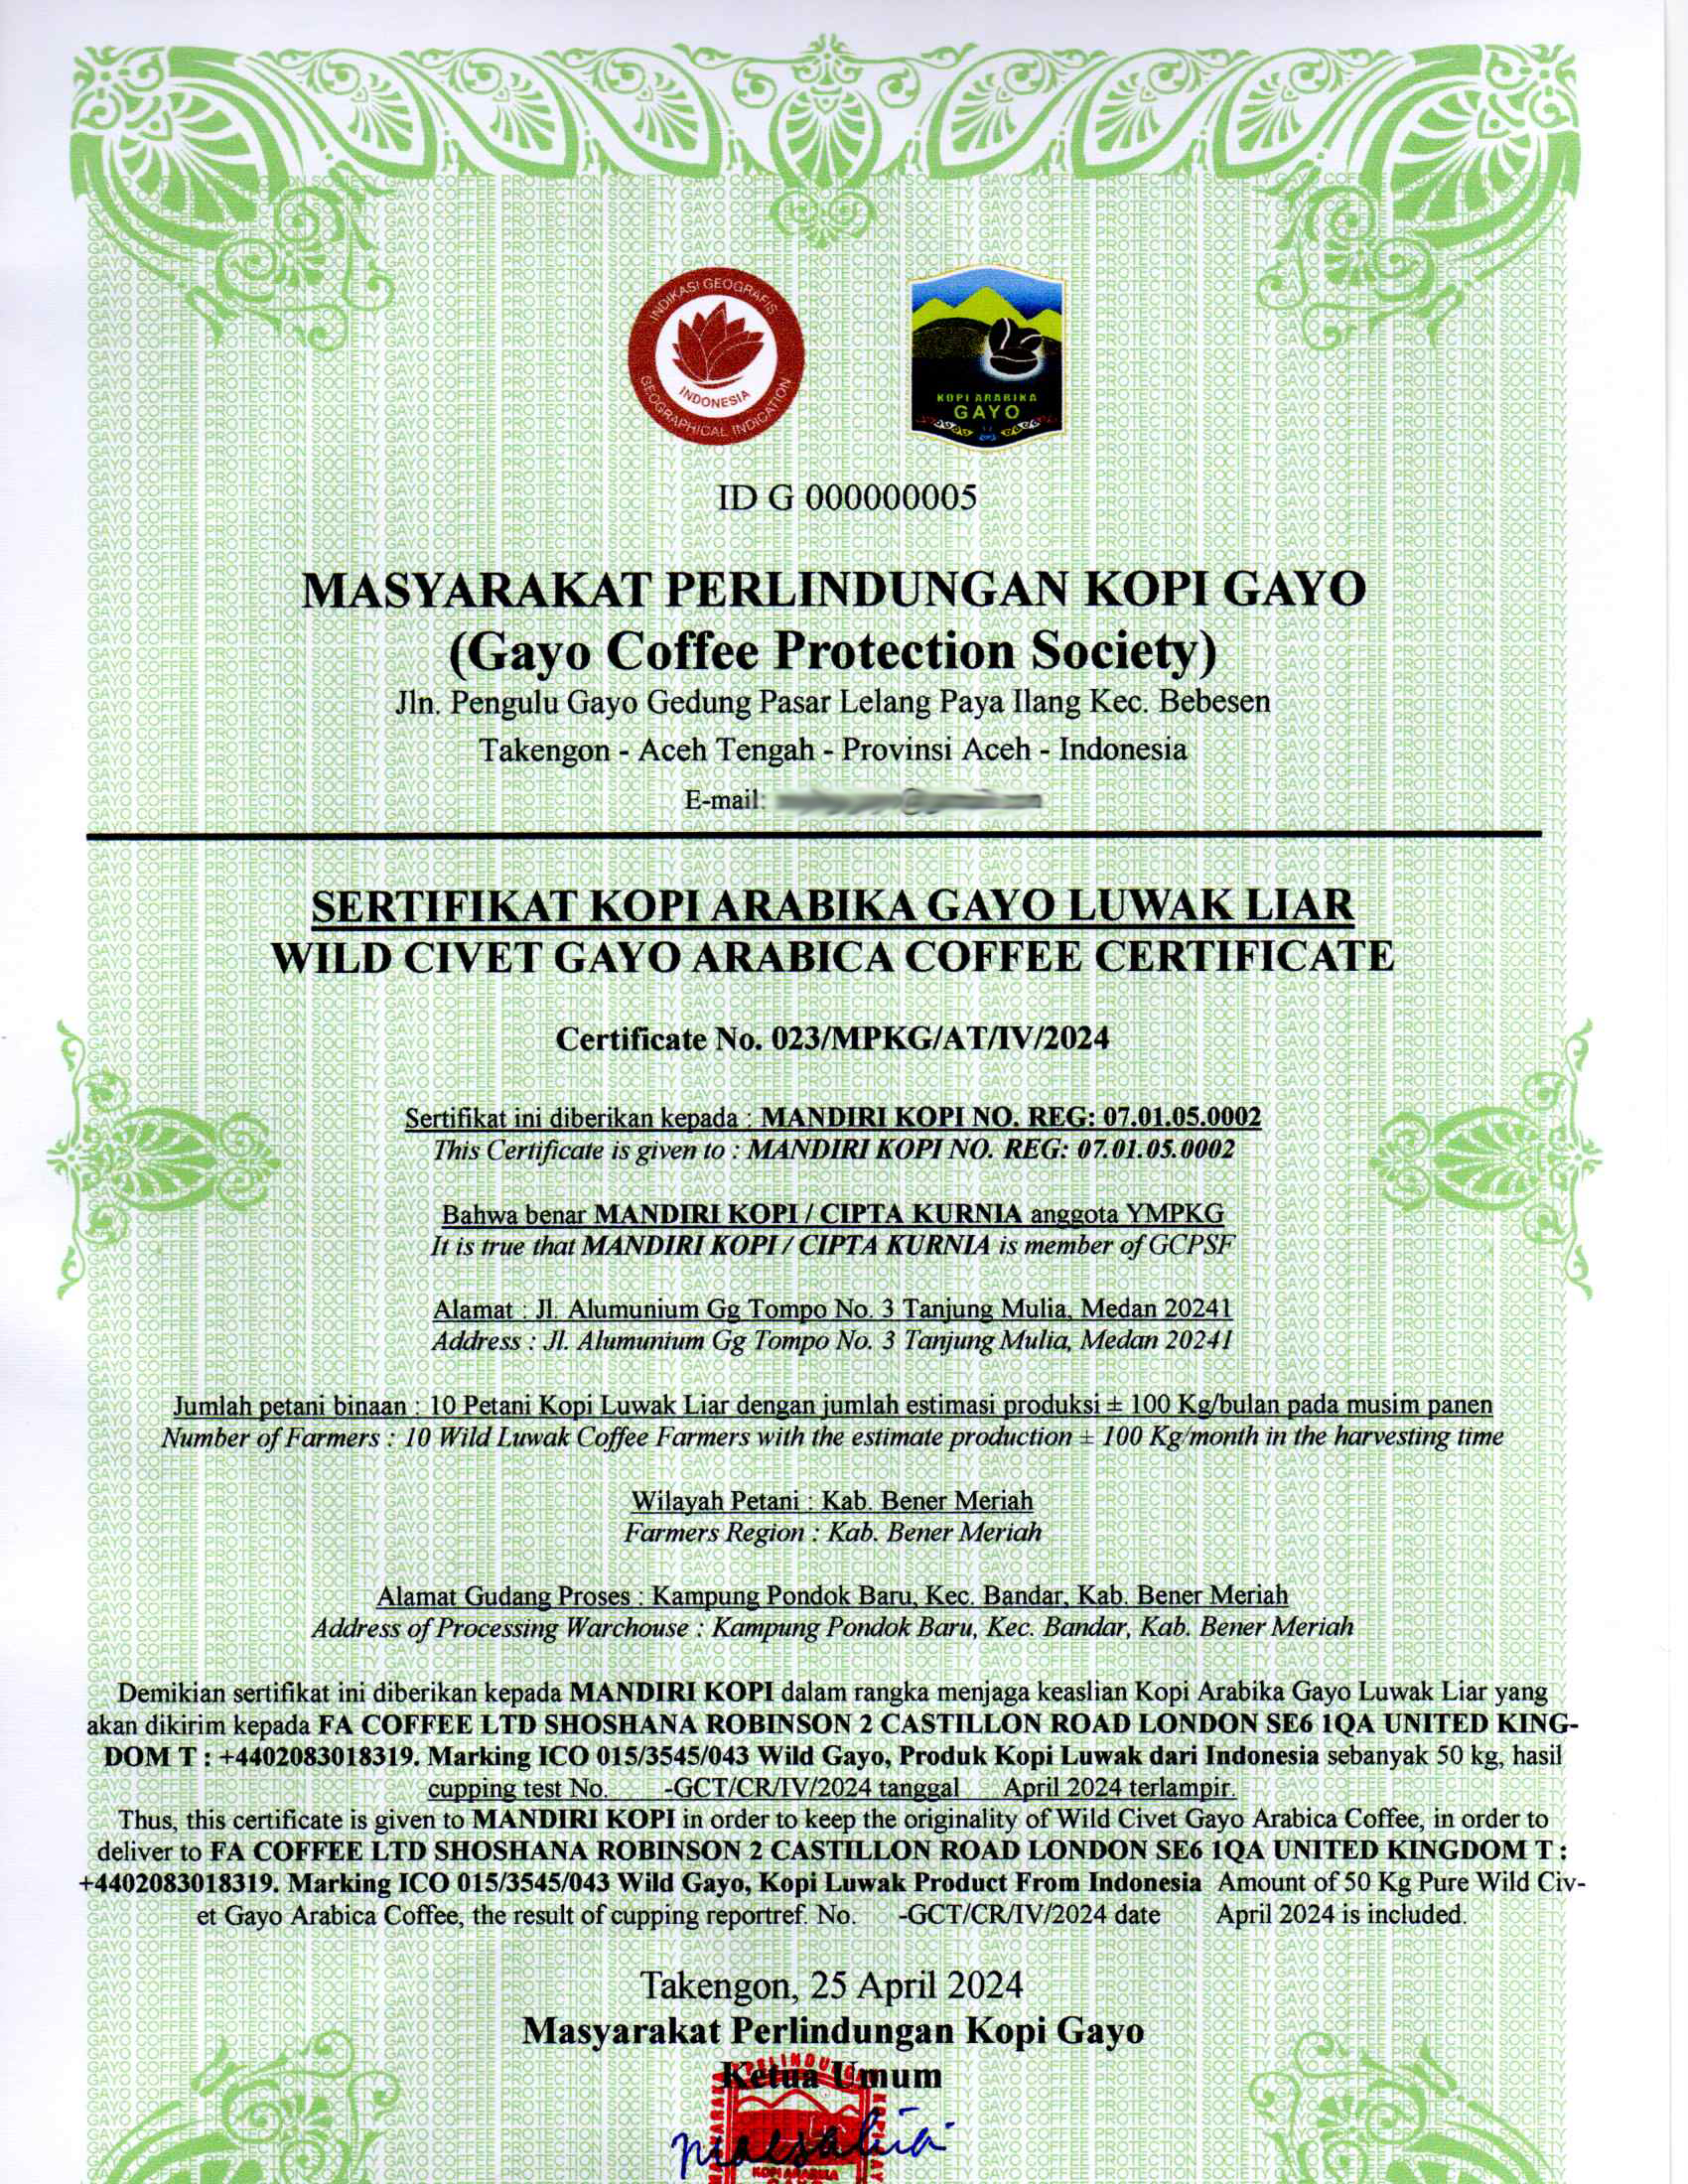 Kopi Luwak Coffee Certificate of Authenticity  - Free Range Kopi Luwak Certificate